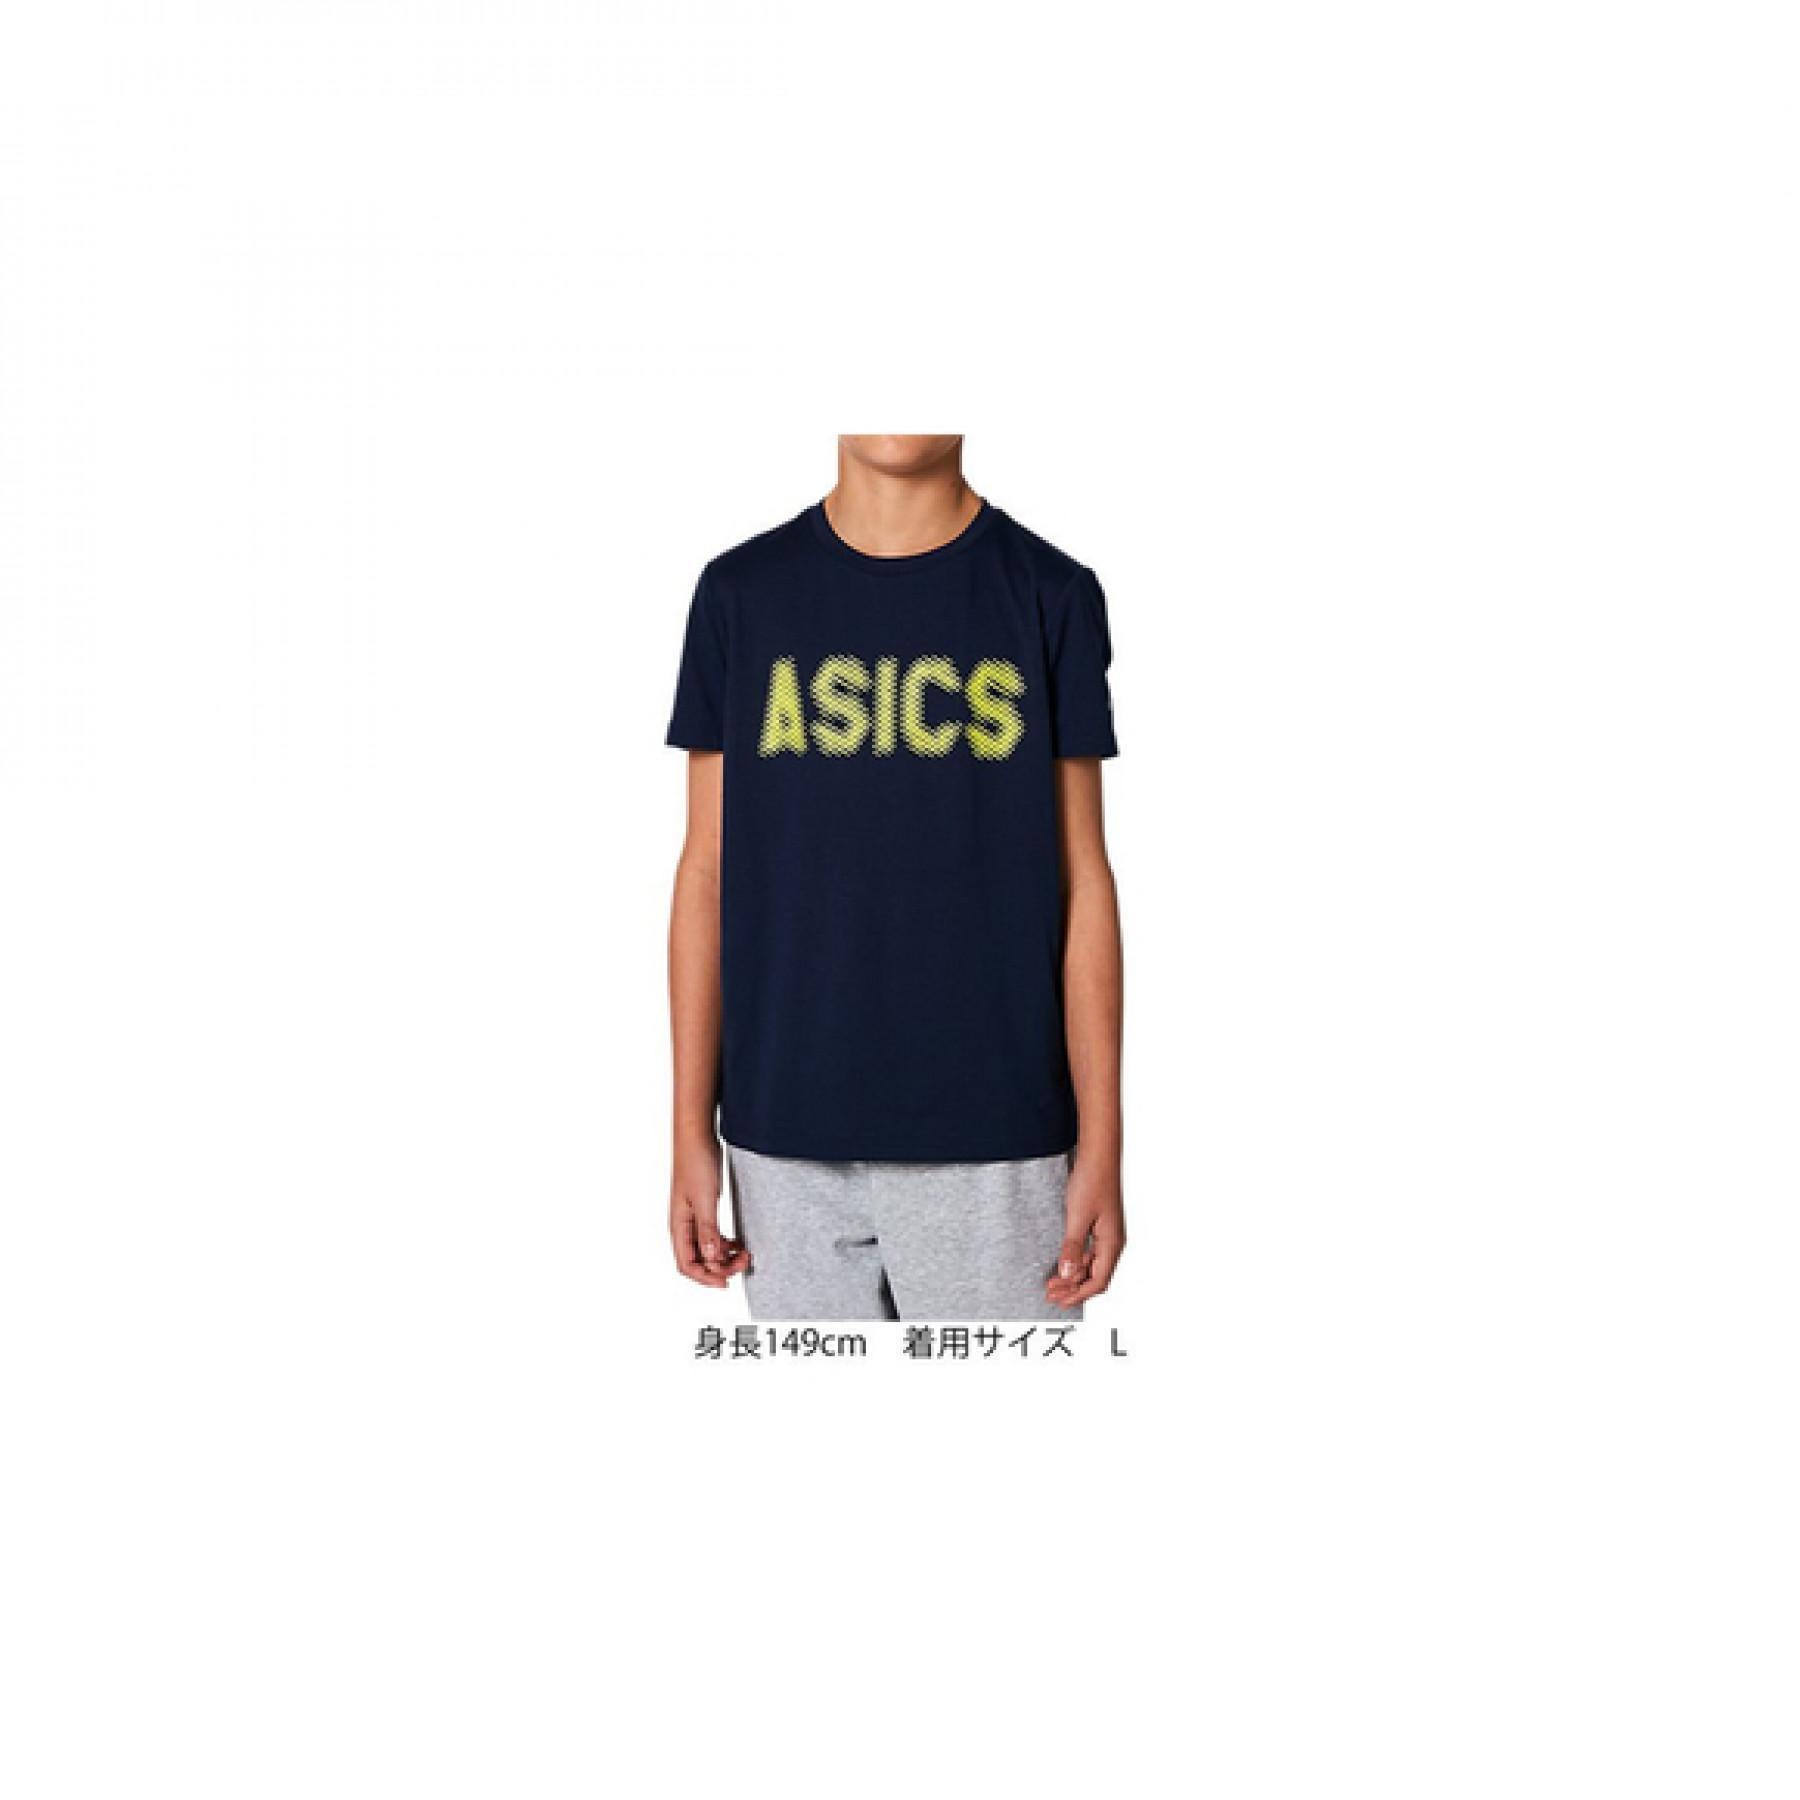 Child's T-shirt Asics Gpxt